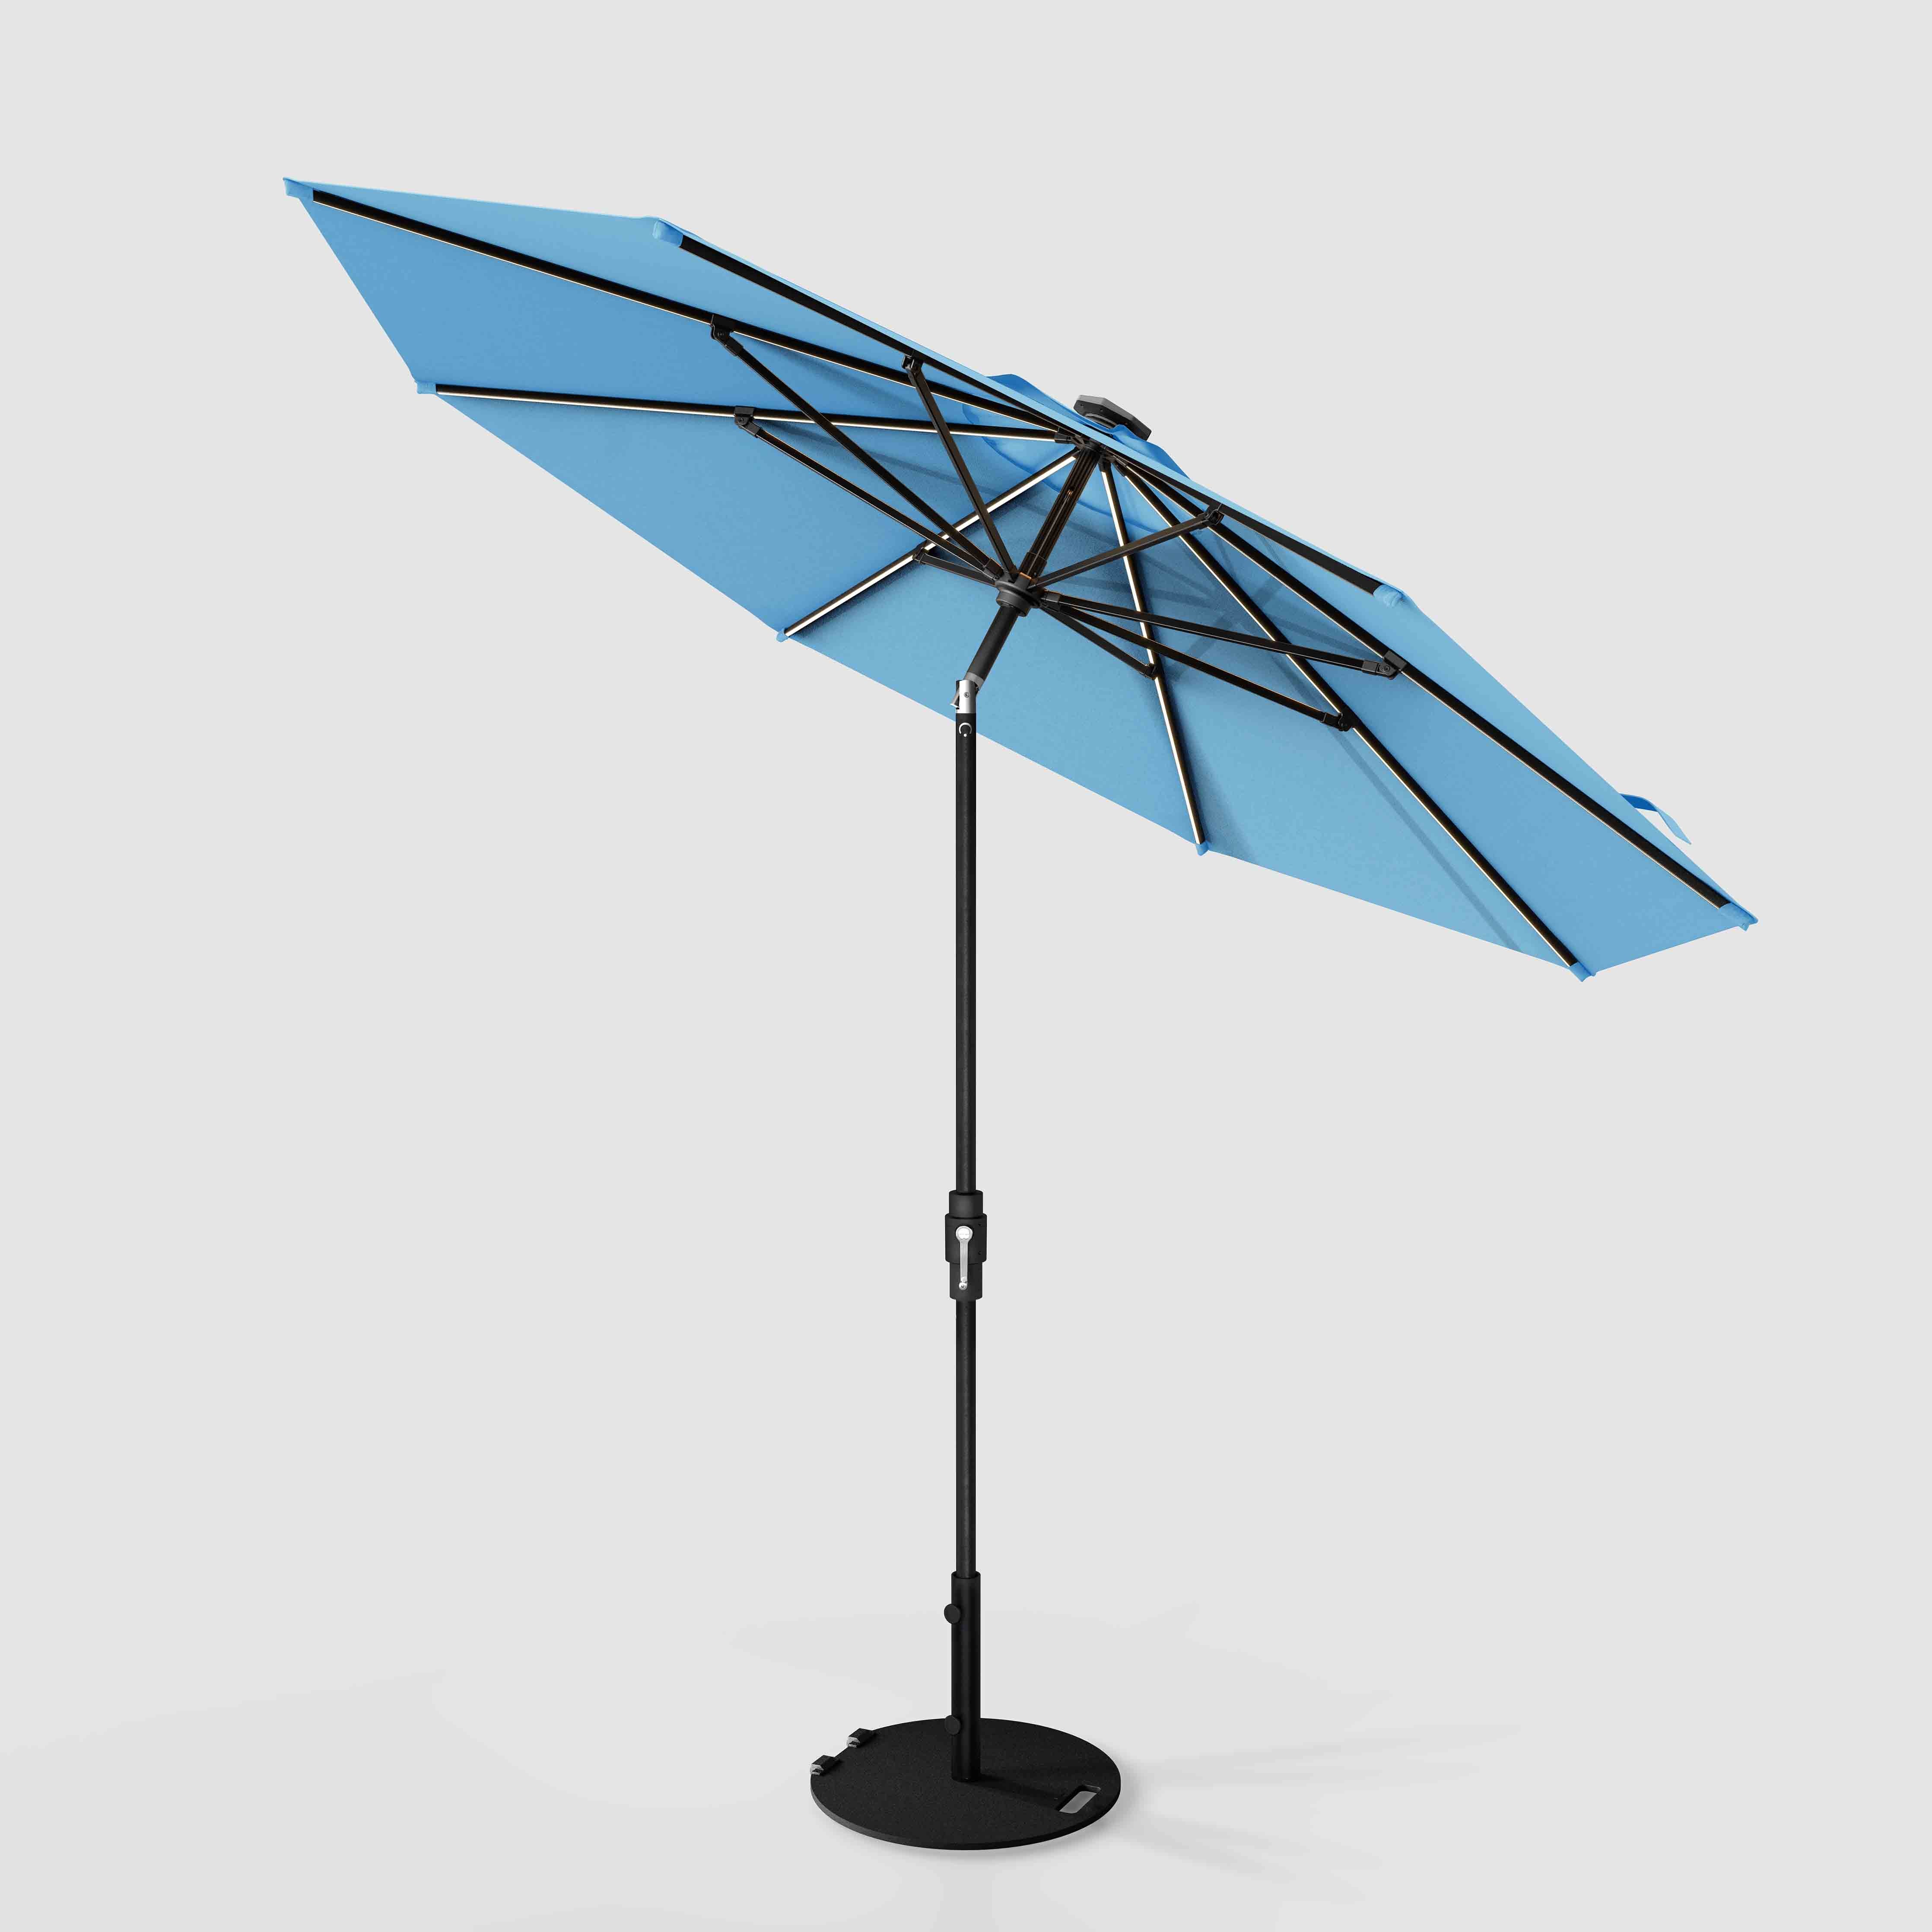 The LED Swilt™ - Sunbrella Capri